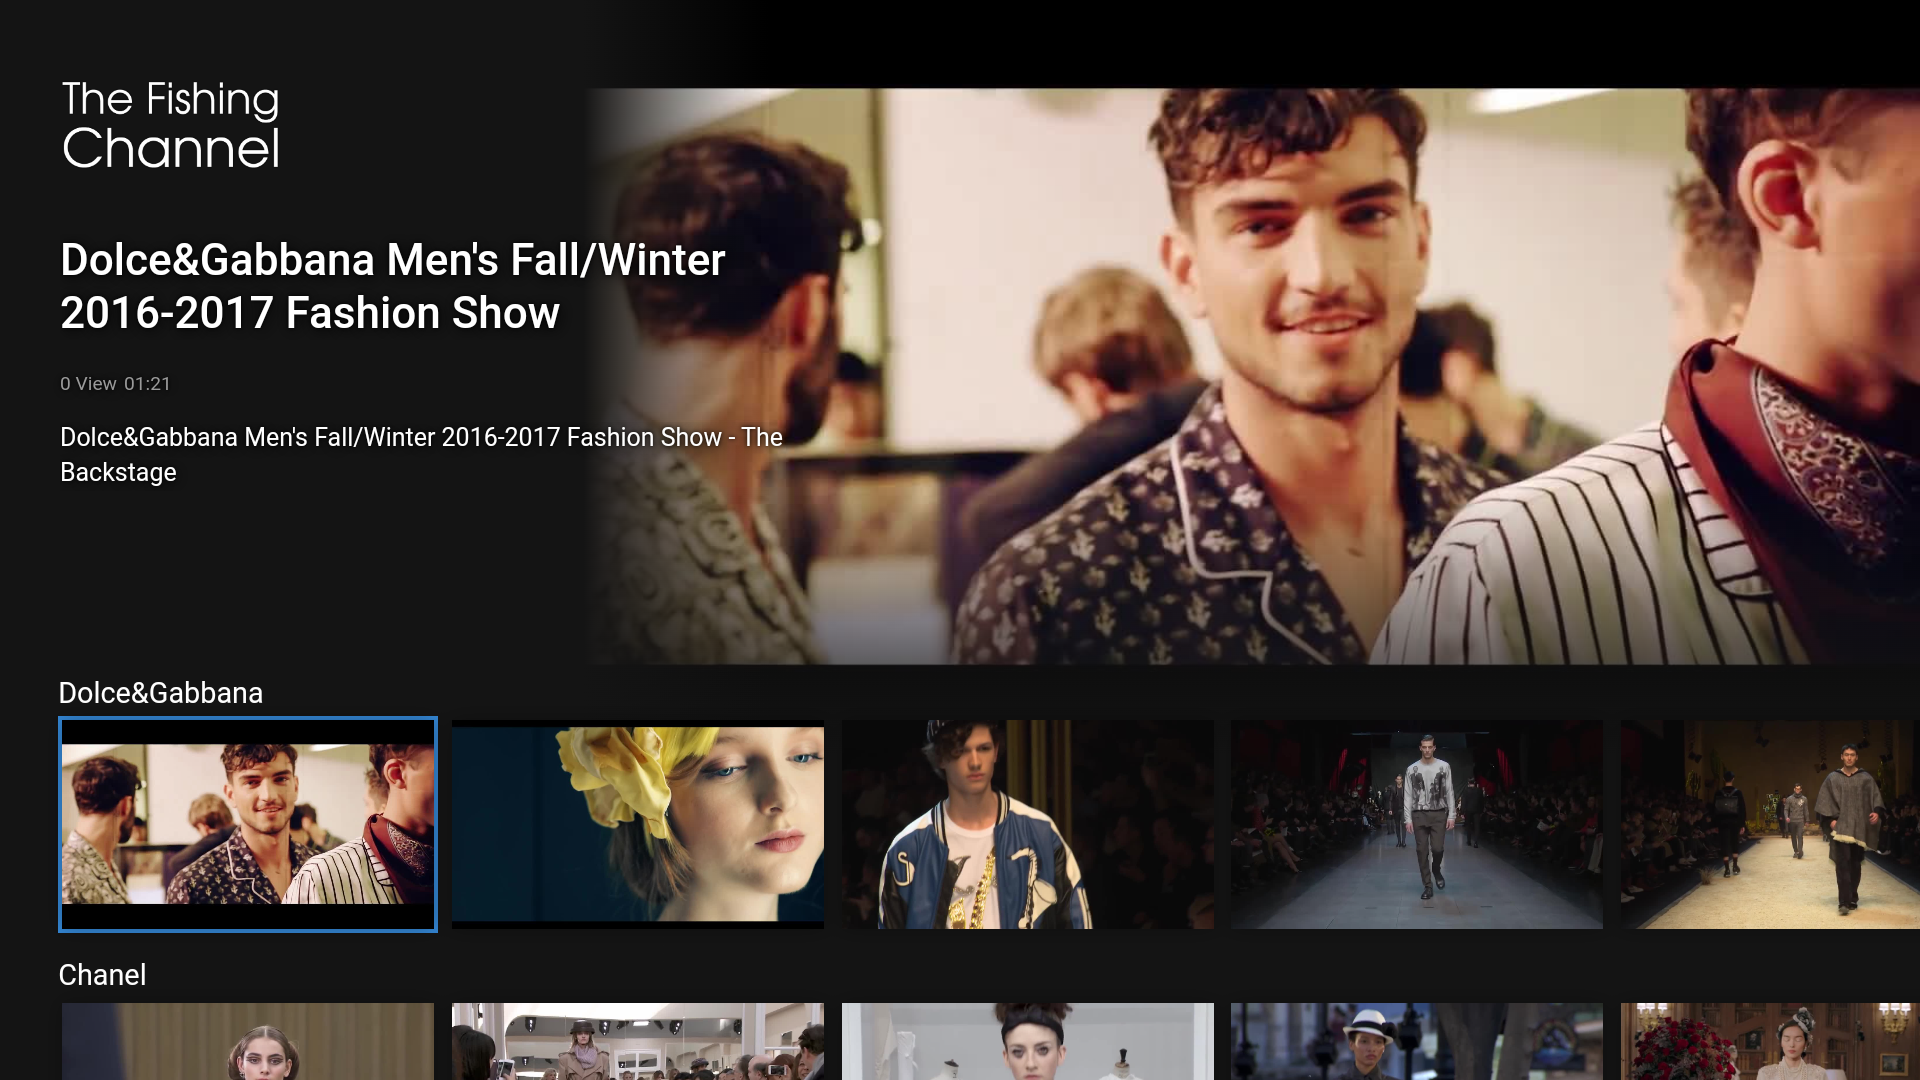 The Fashion Channel Screenshot 002